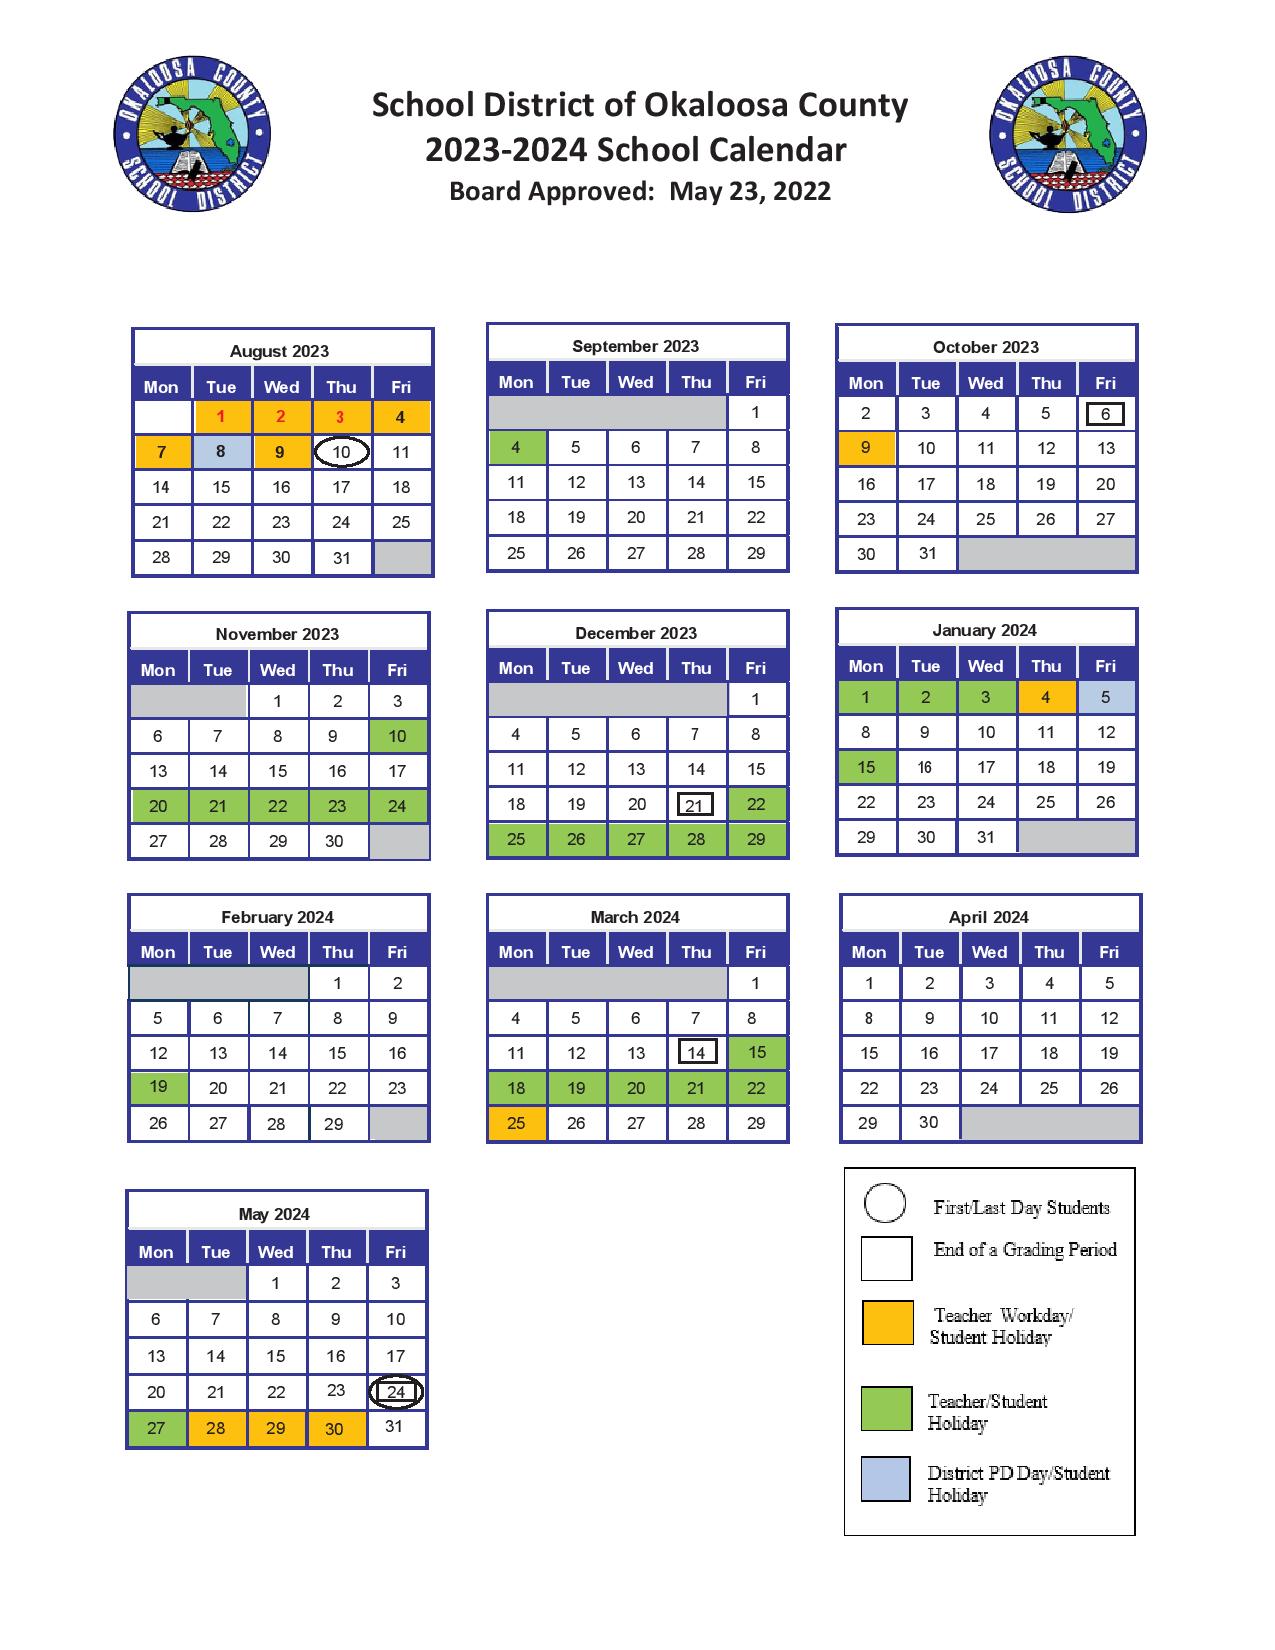 Okaloosa County School District Calendar 2023 2024 in PDF